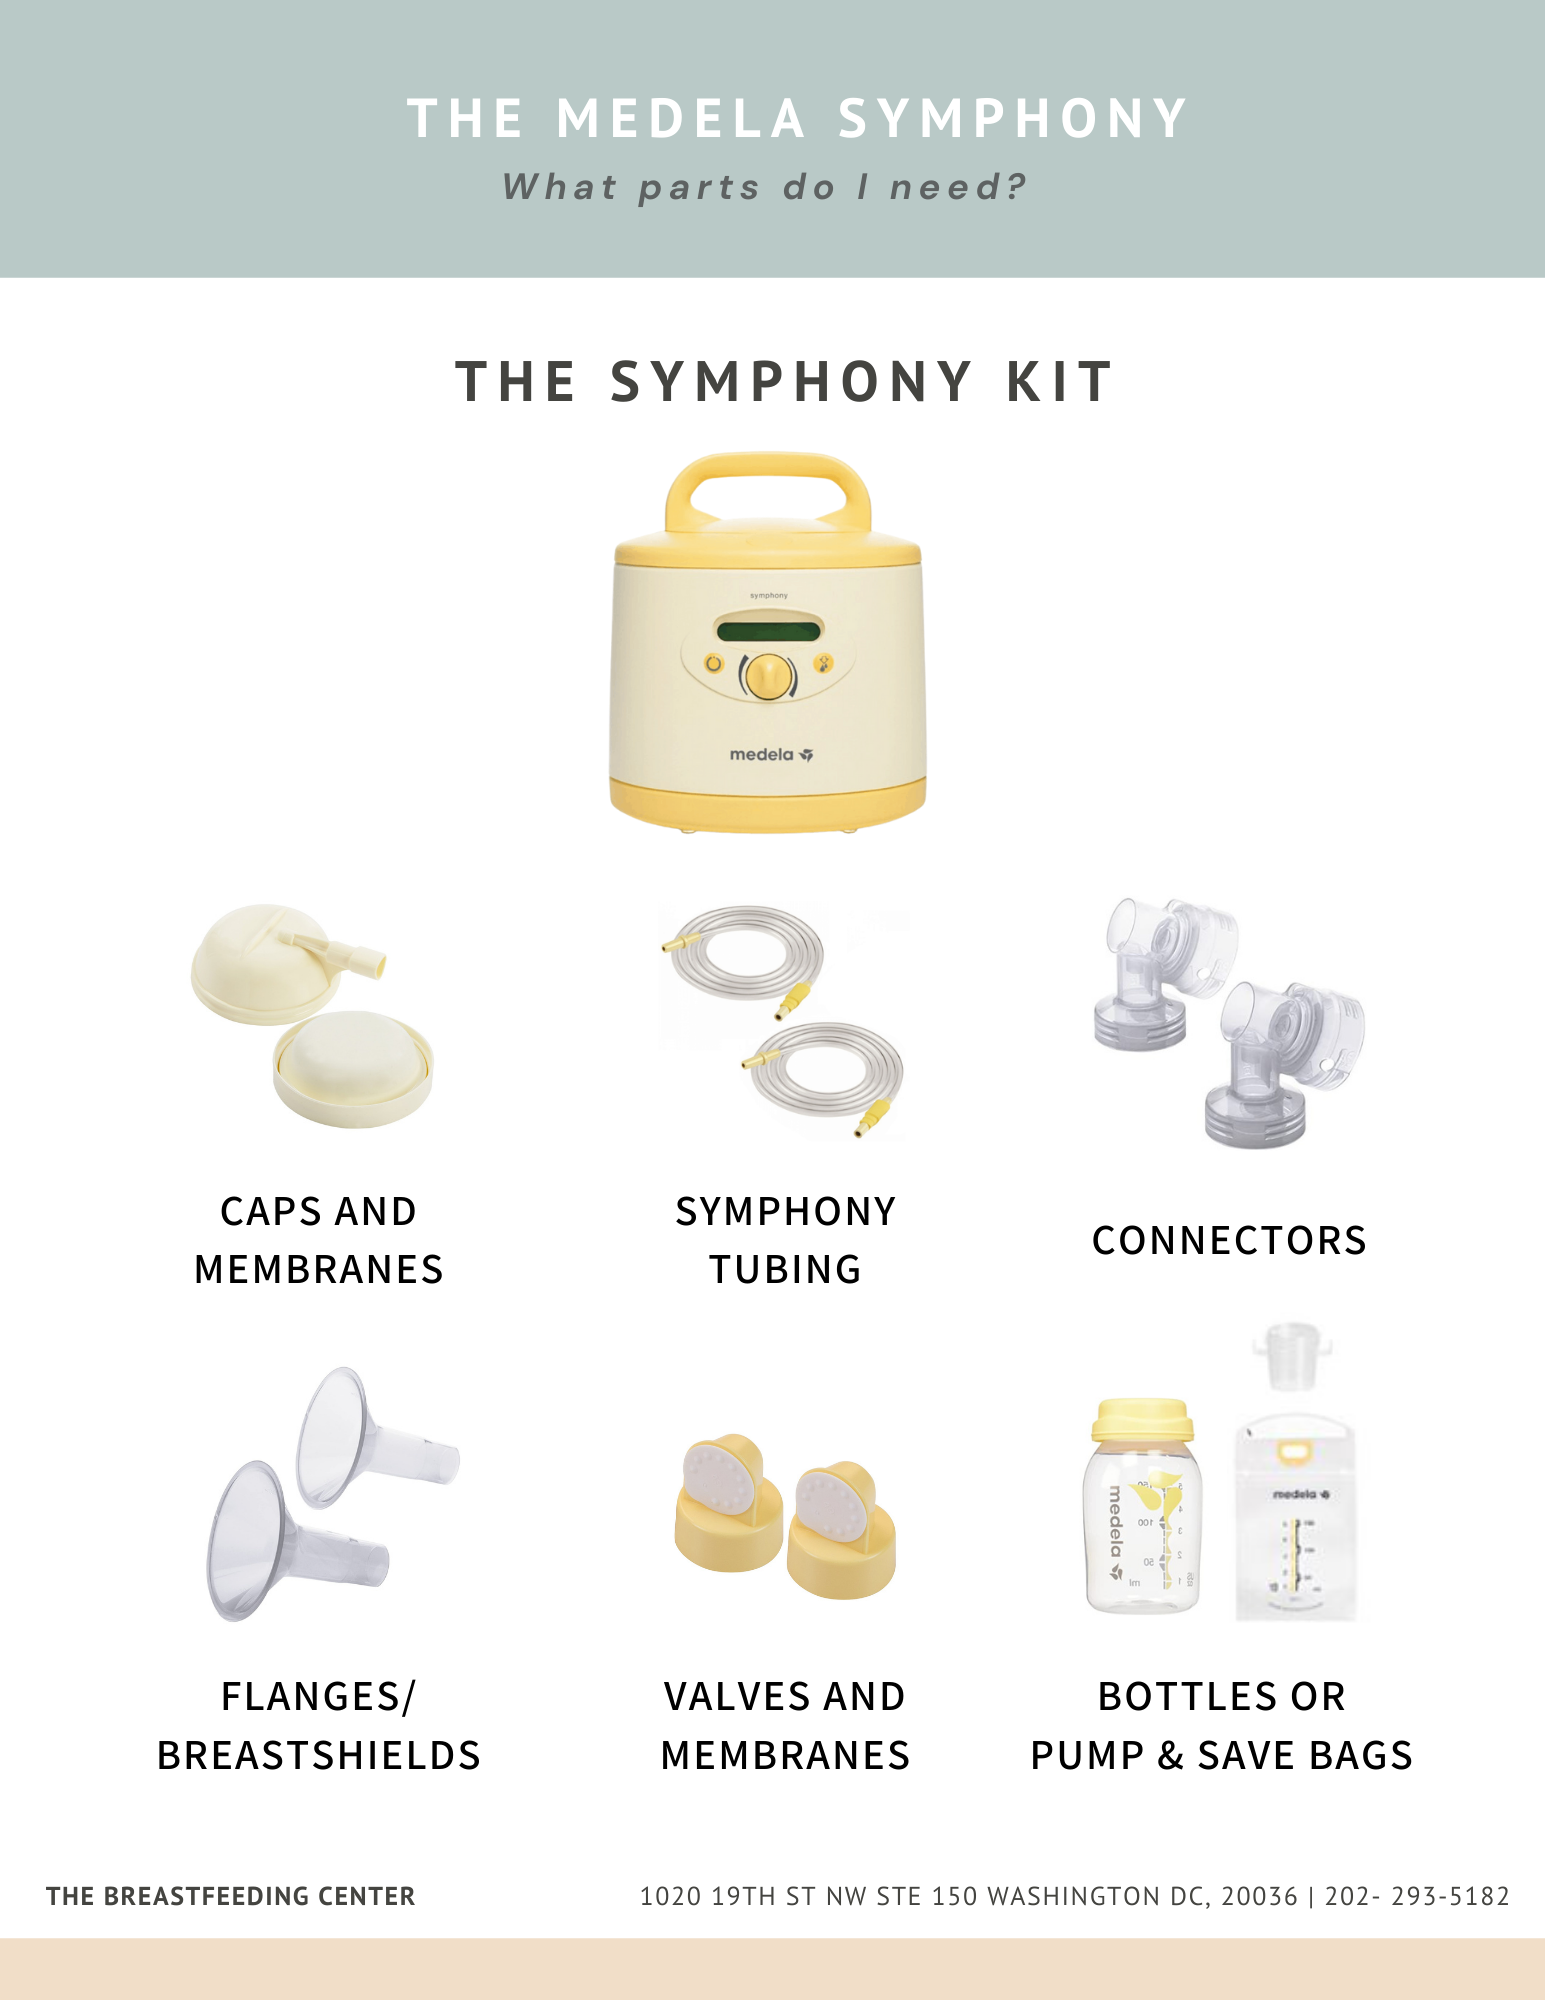 Medela Symphony & Lactina Breast Milk Initiation Kit for Breastfeeding